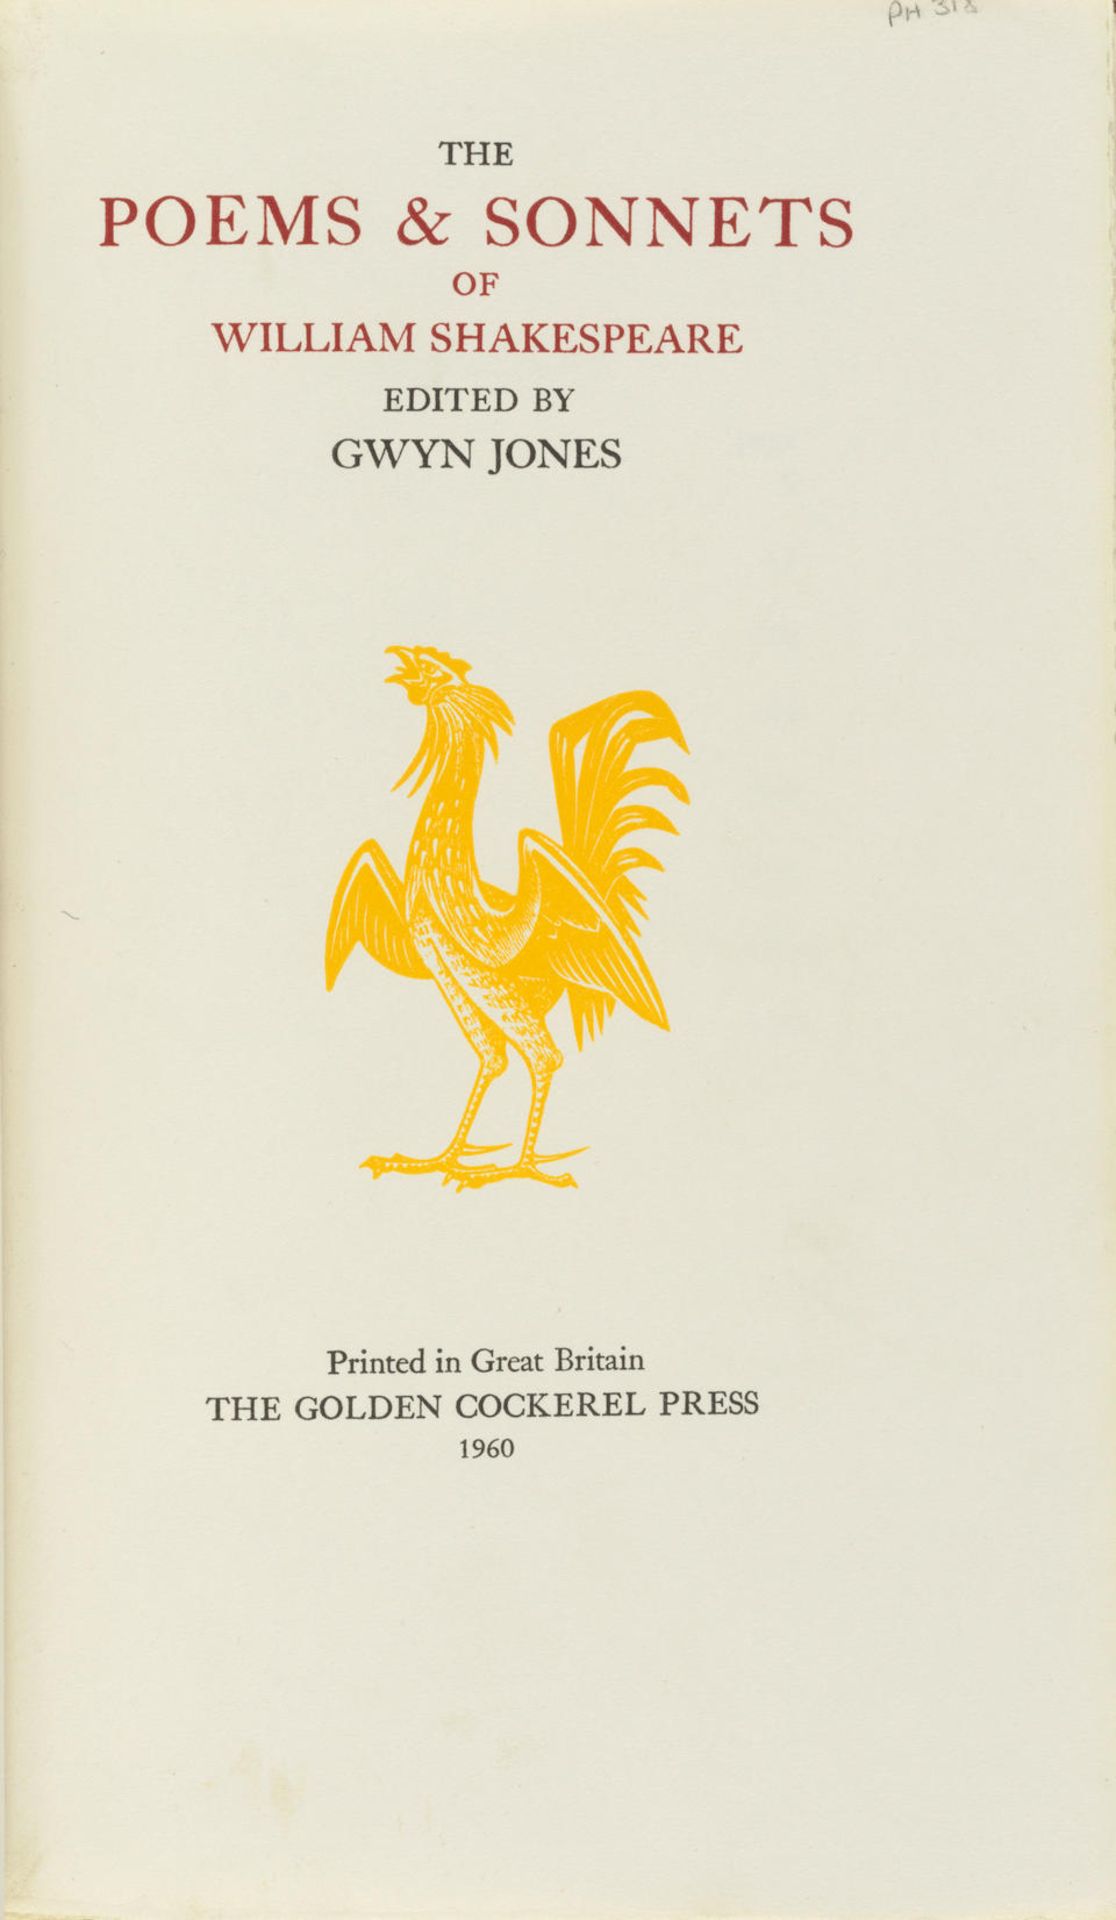 GOLDEN COCKEREL PRESS. SHAKESPEARE, WILLIAM. 1564-1616; and JOHN BUCKLAND WRIGHT, Illustrator. T...